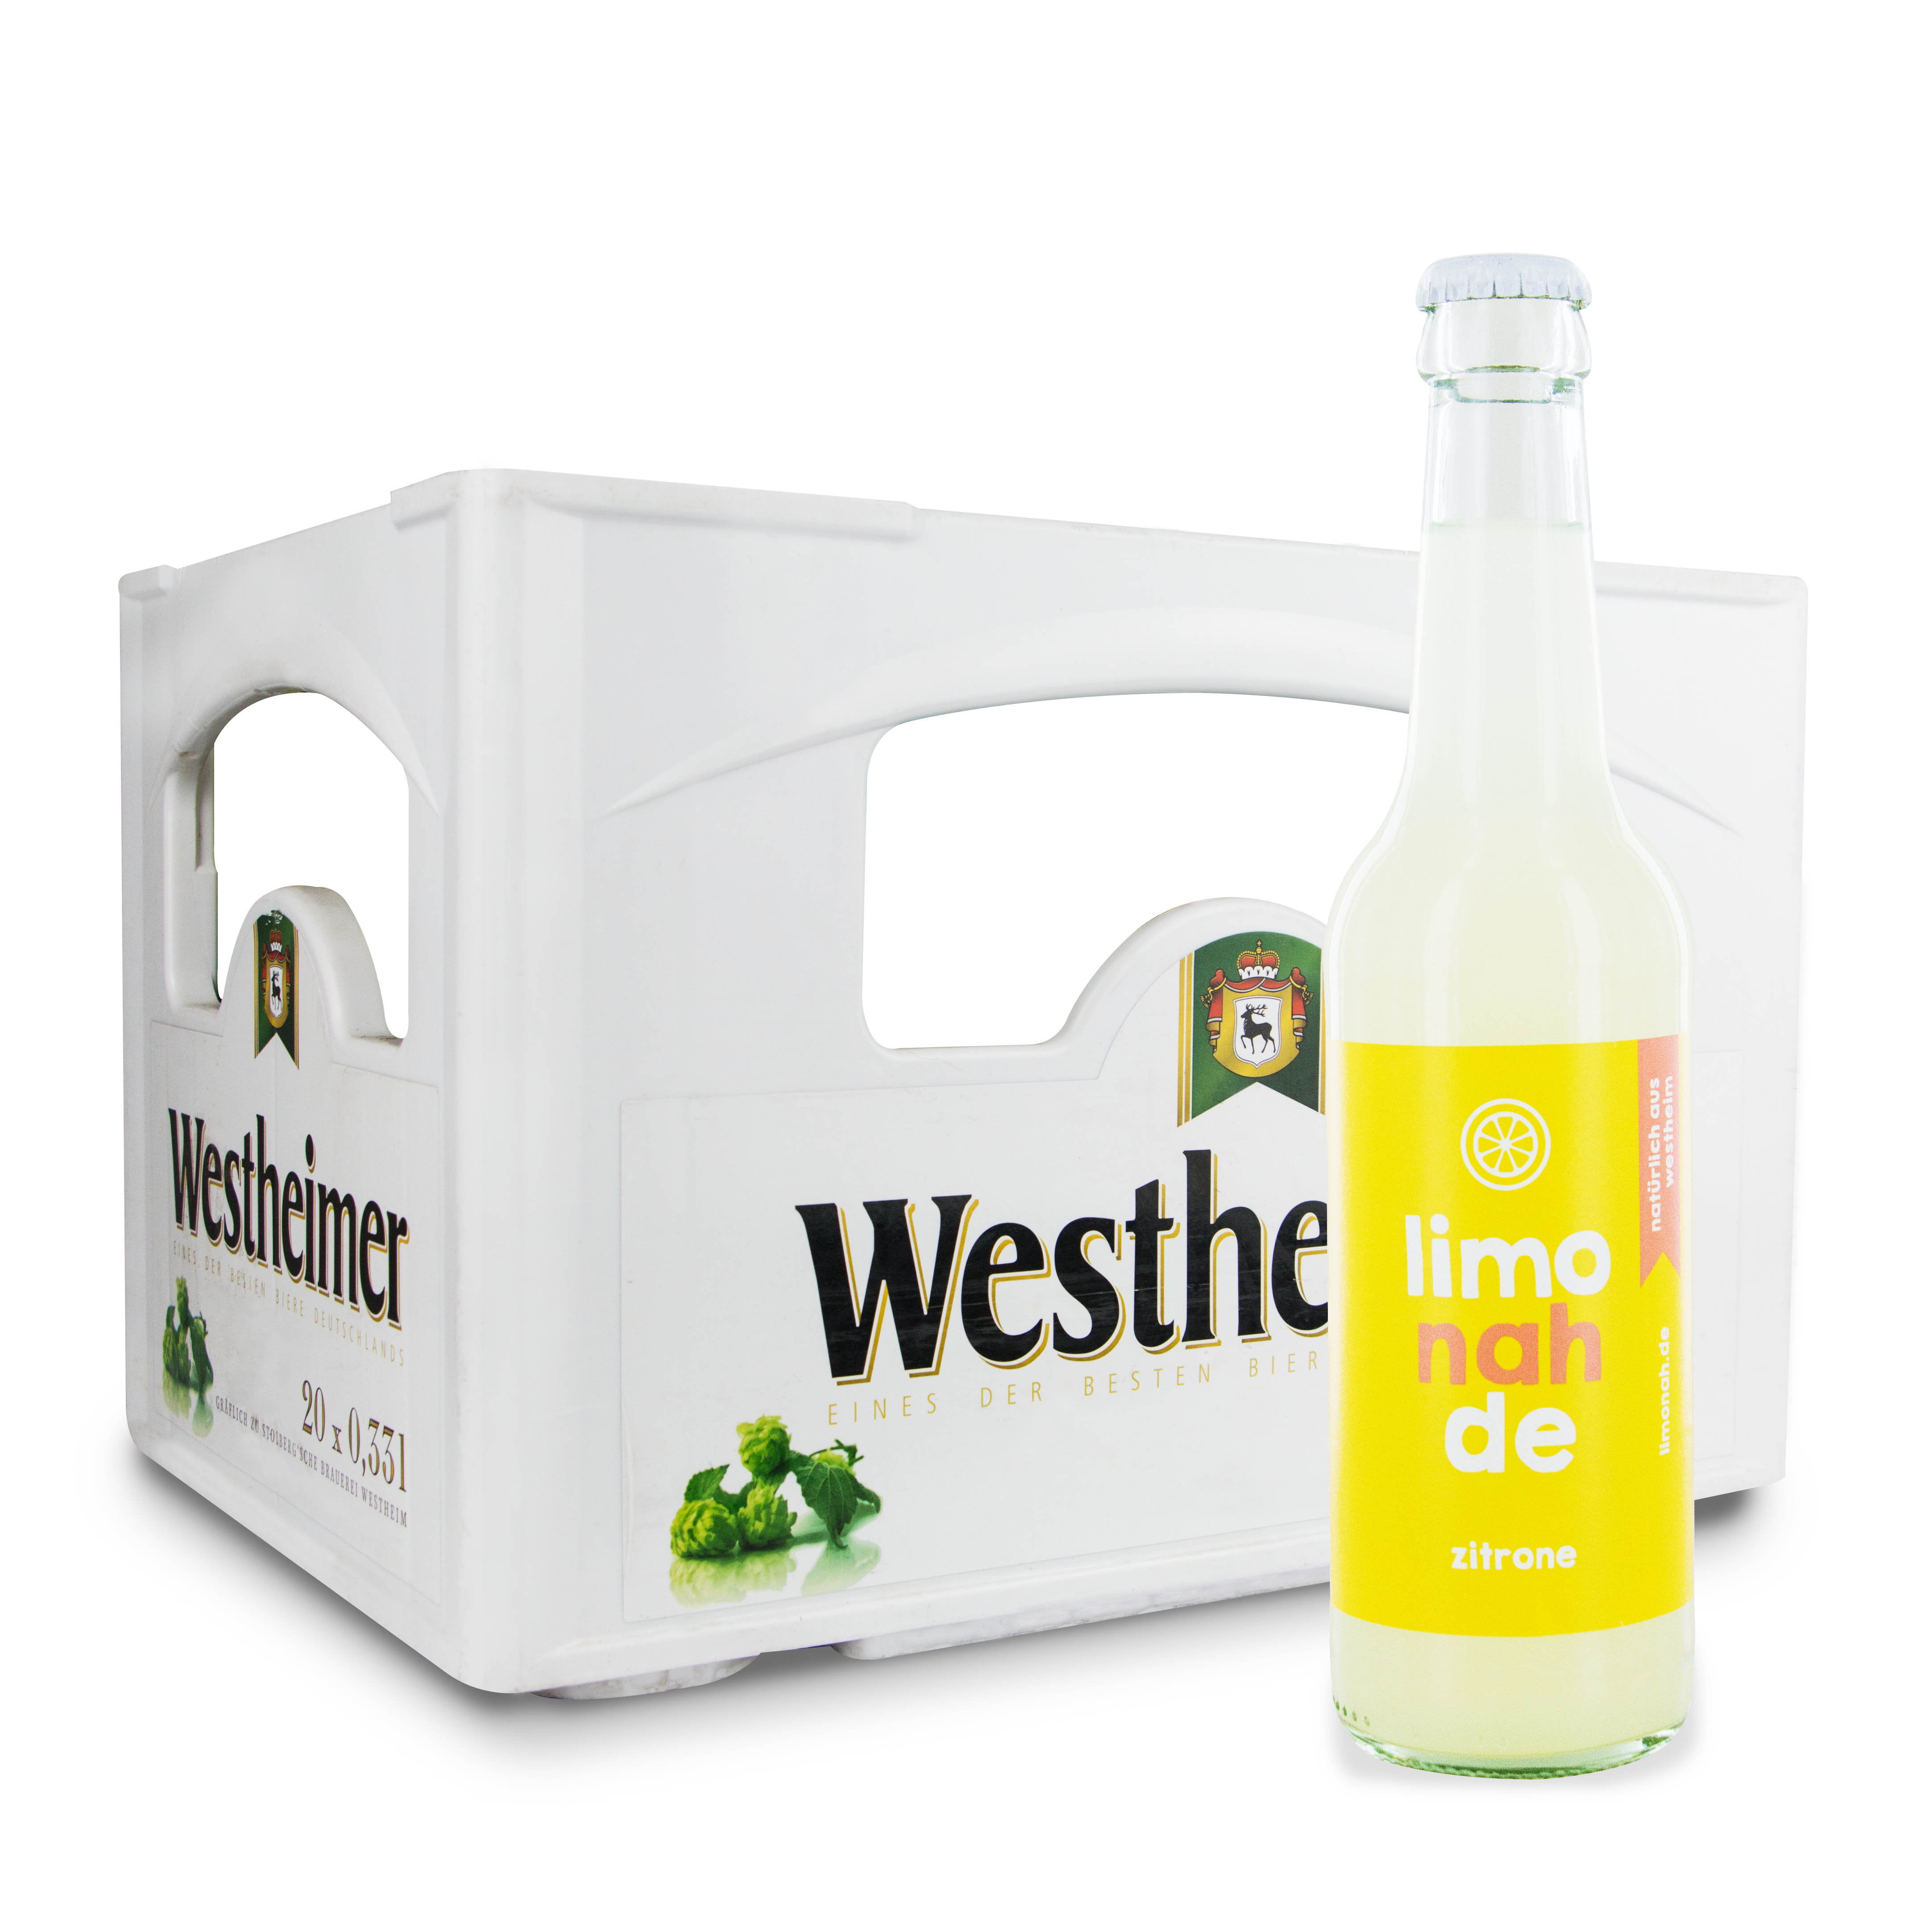 Westheimer limoNAHde Zitrone in der Kiste-zoom